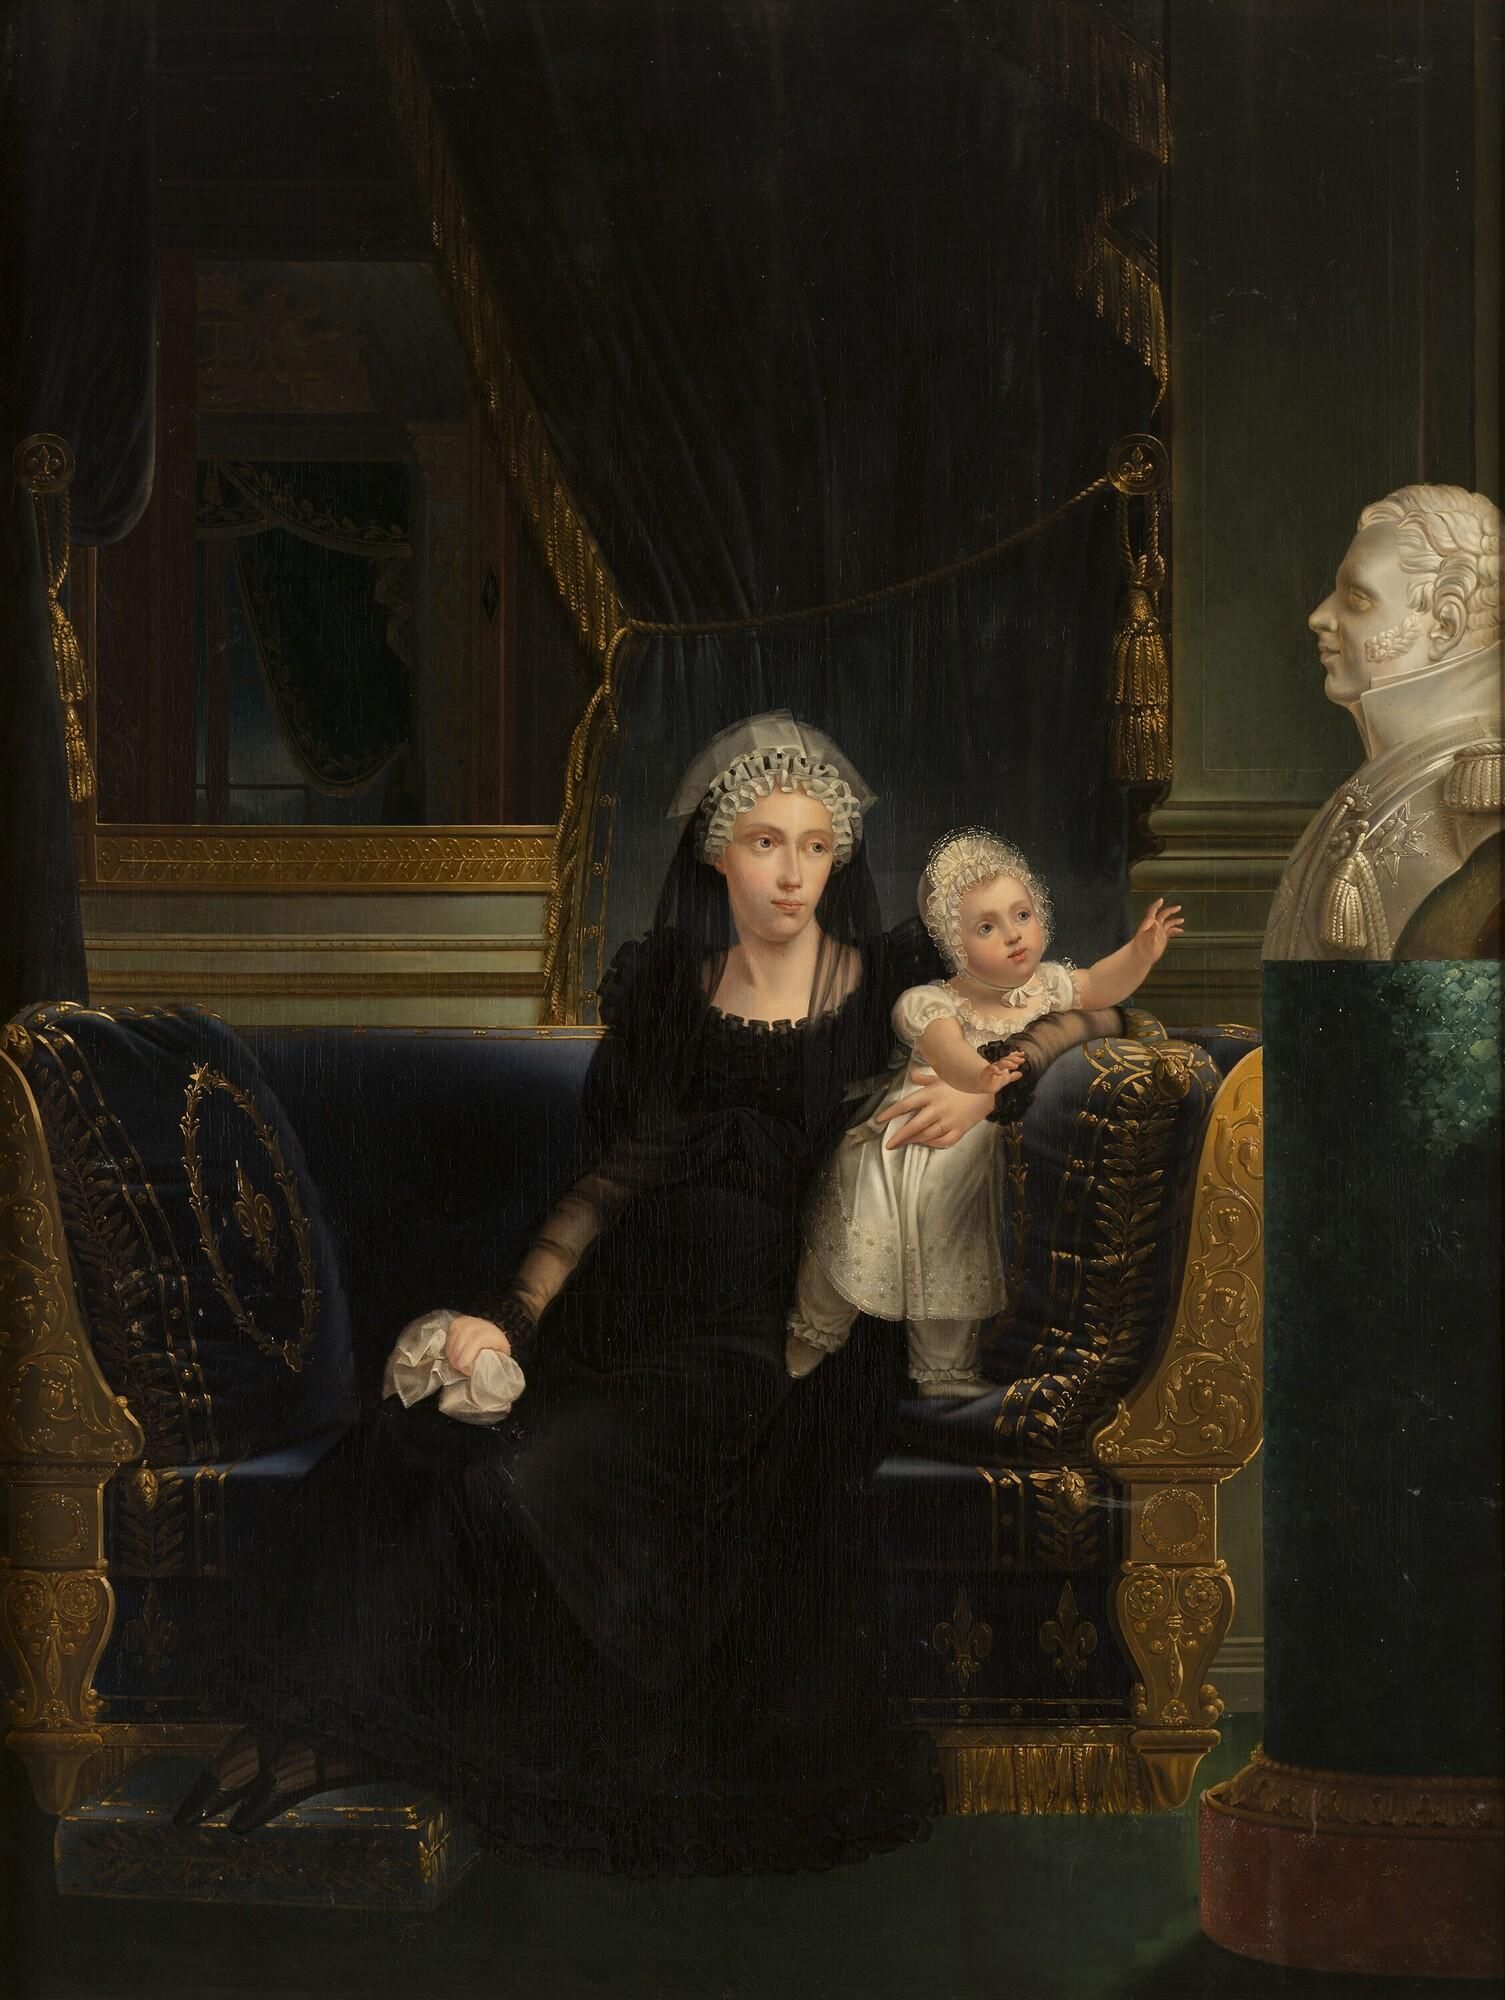 Marie-Caroline de Bourbon-Sicile, Duchess of Berry and her daughter Louise-Marie-Thérèse